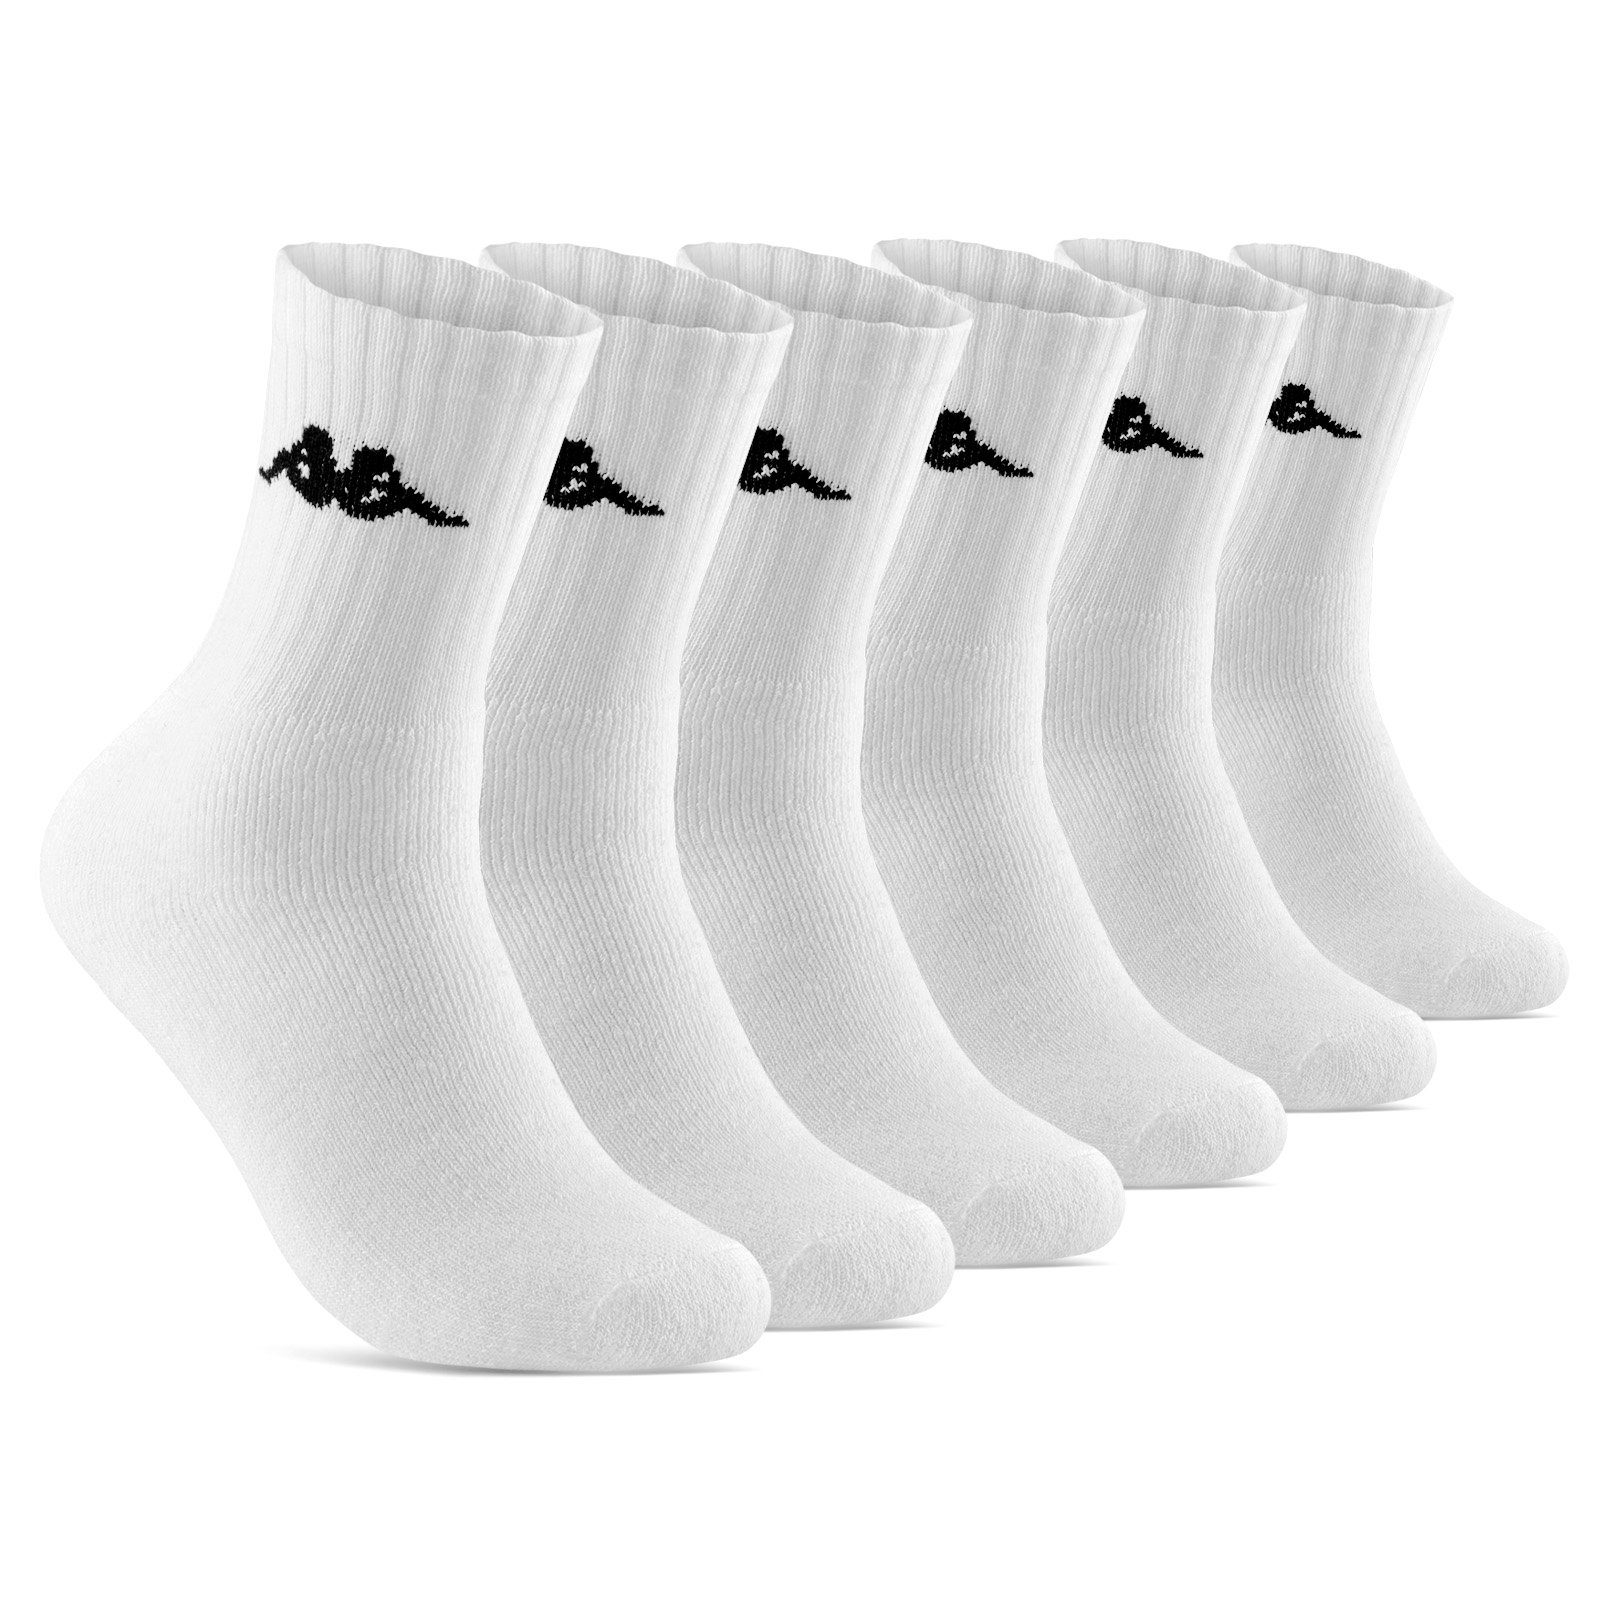 sockenkauf24 Sportsocken 6 oder 12 Paar KAPPA Socken Herren & Damen Sportsocken (Weiß, 6-Paar, 39-42) Arbeitssocken Baumwolle WP